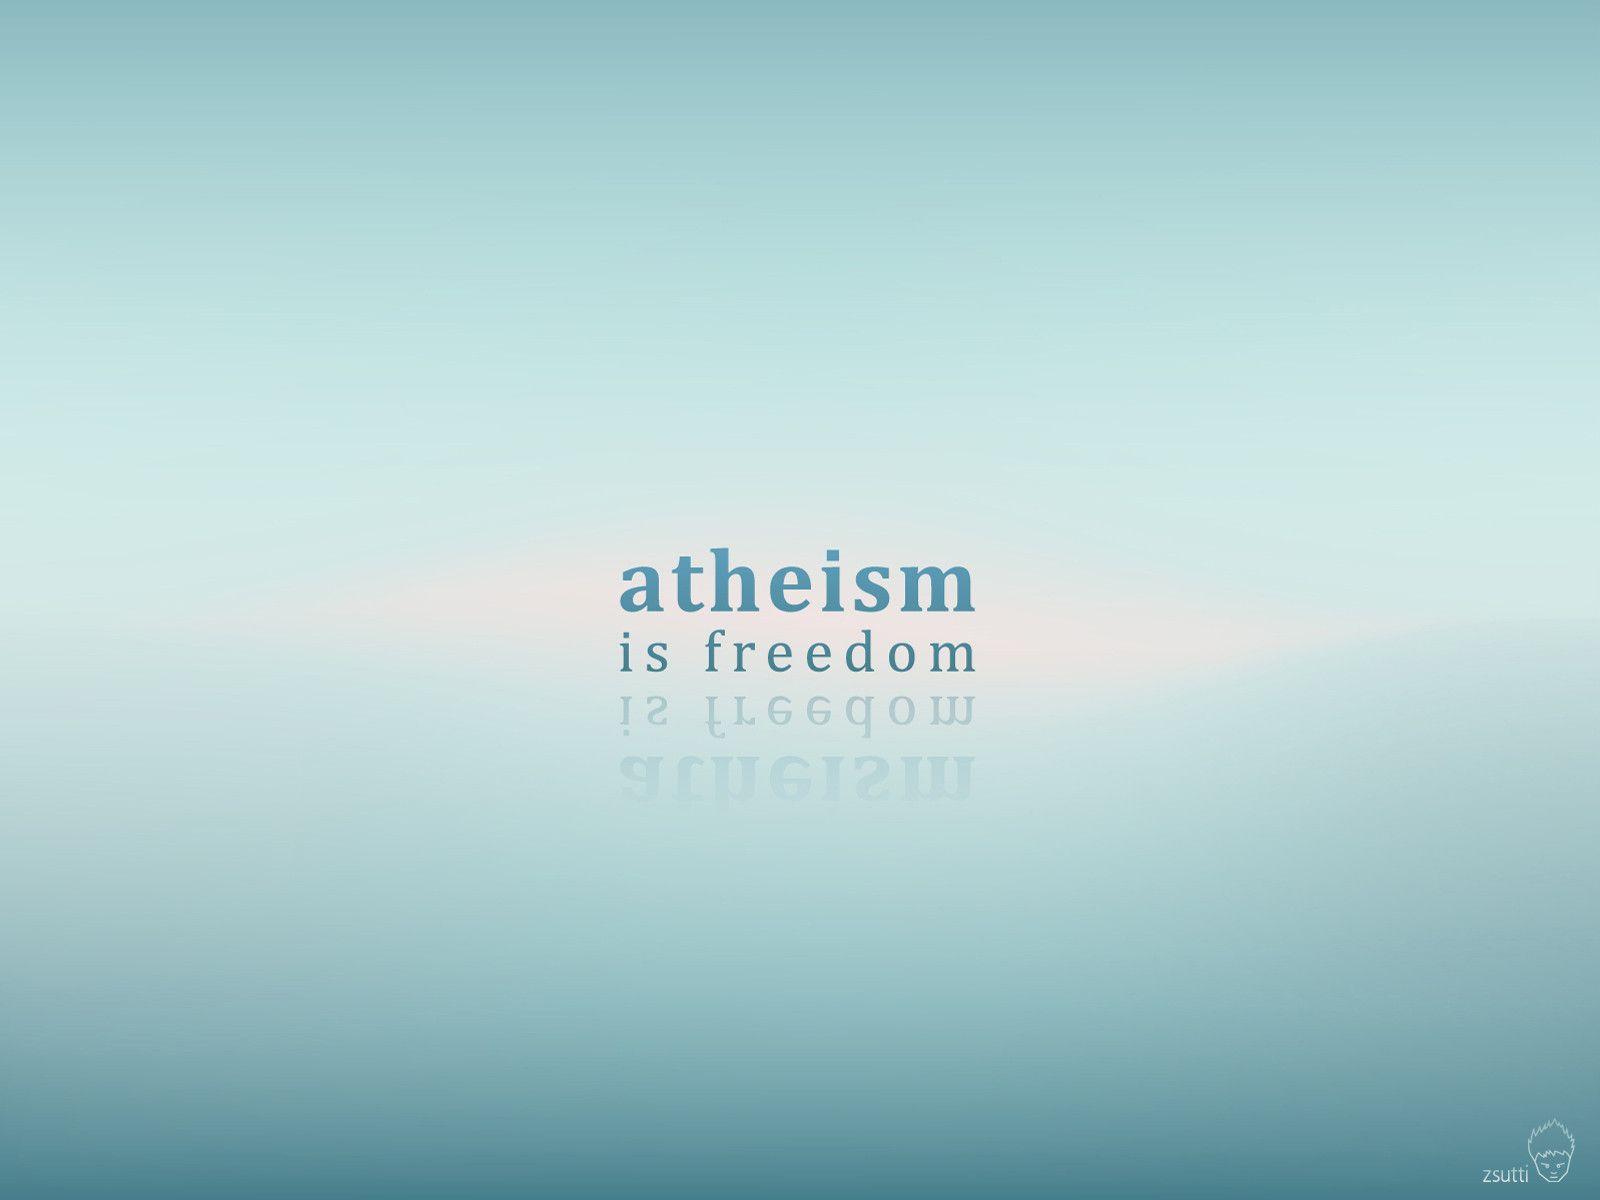 Download Religion Atheism Wallpaper 1920x1200 #